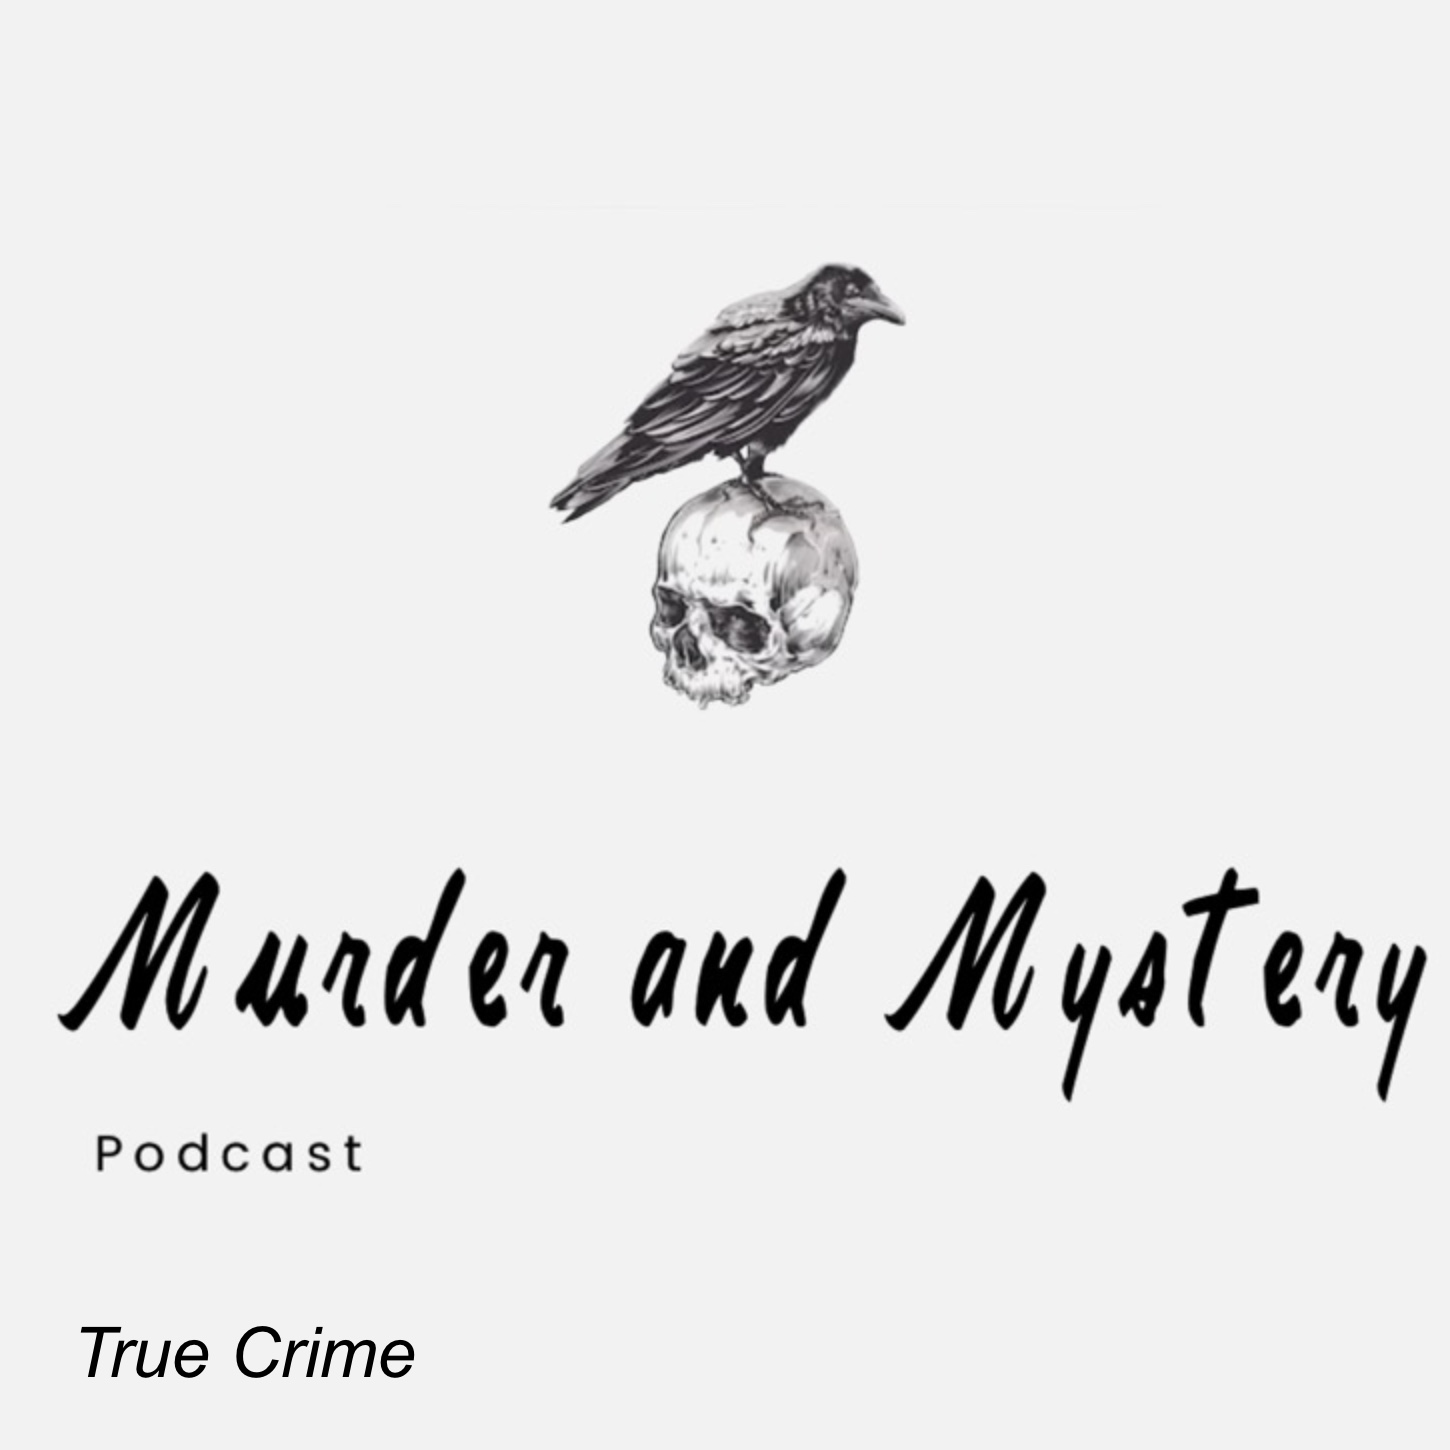 The murderandmystery‘s Podcast